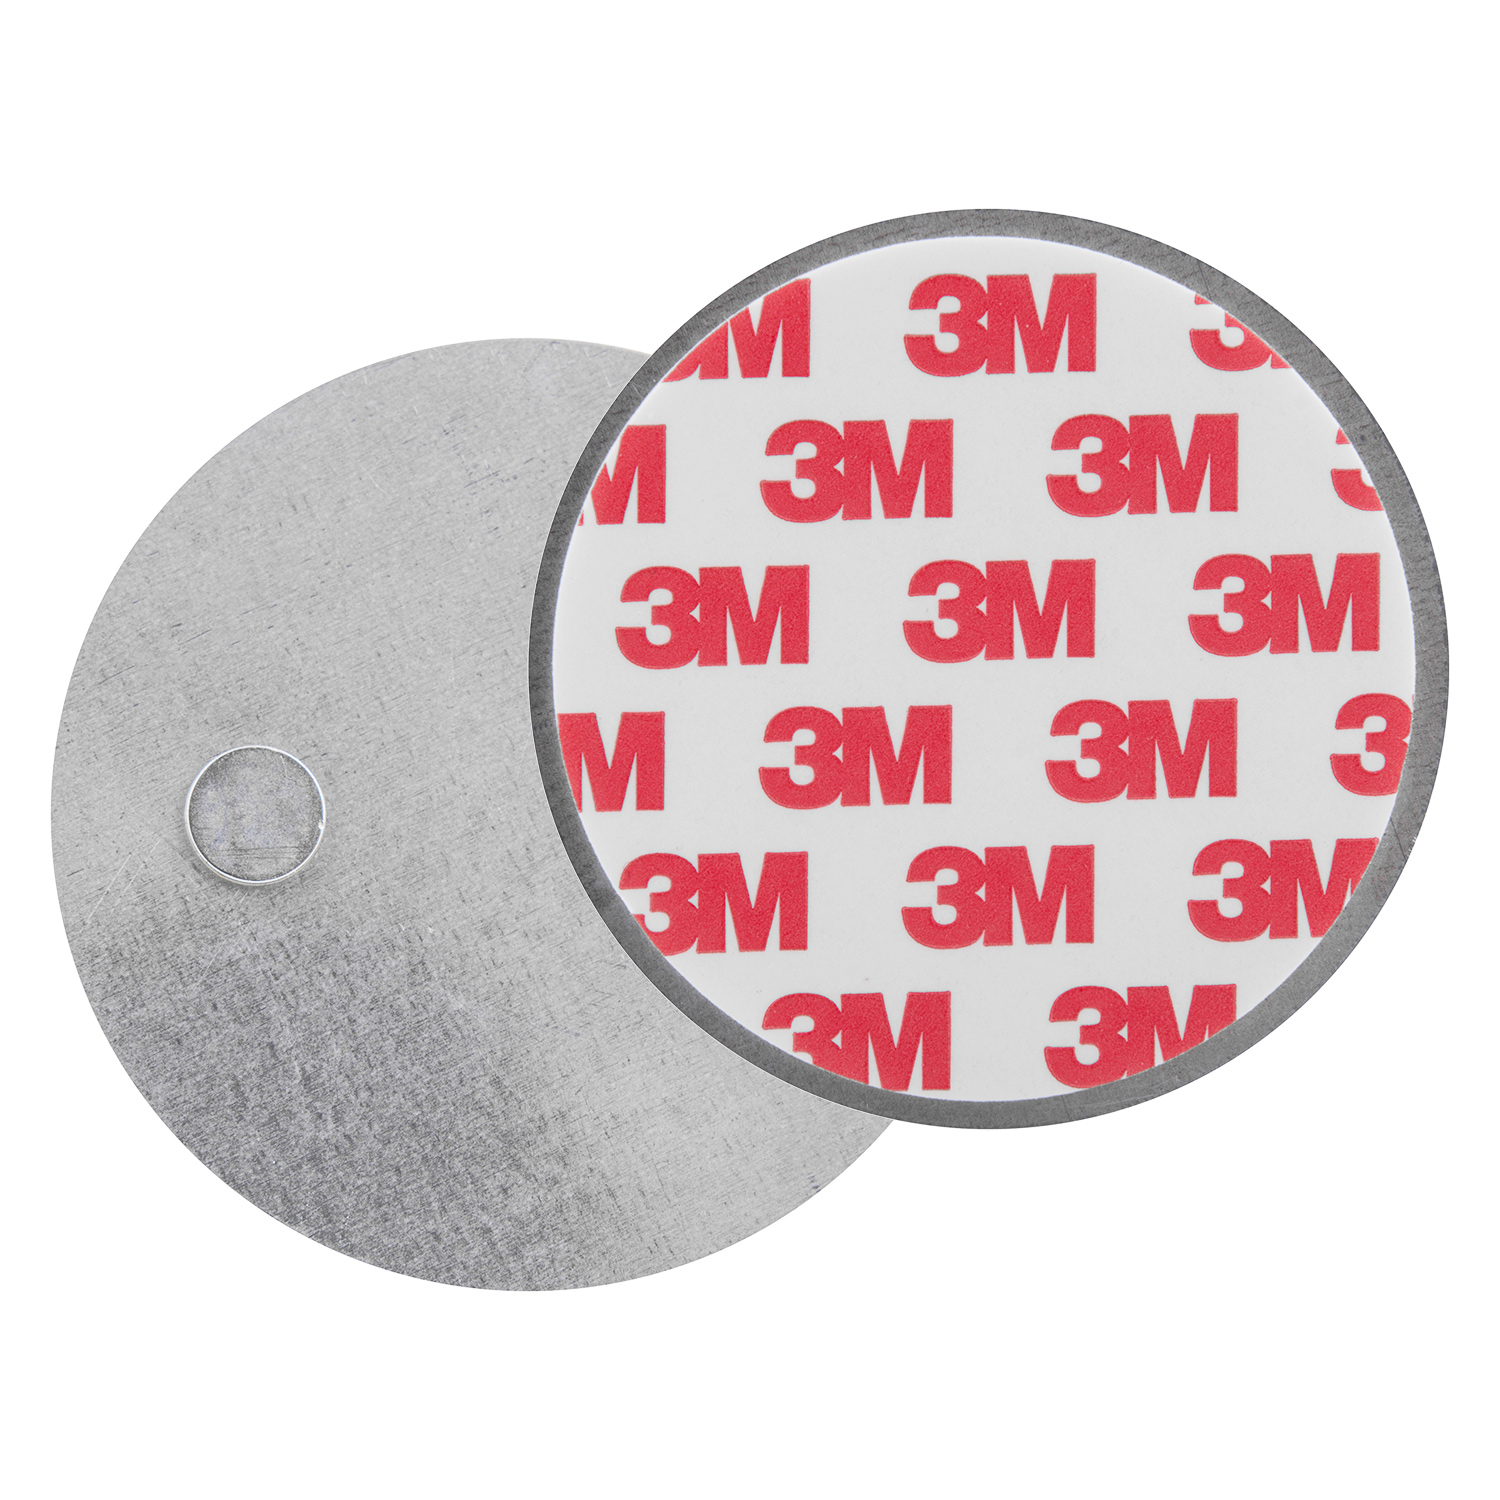 Magnetic Smoke & CO Alarm Mounting Kit - From £3.35 inc VAT